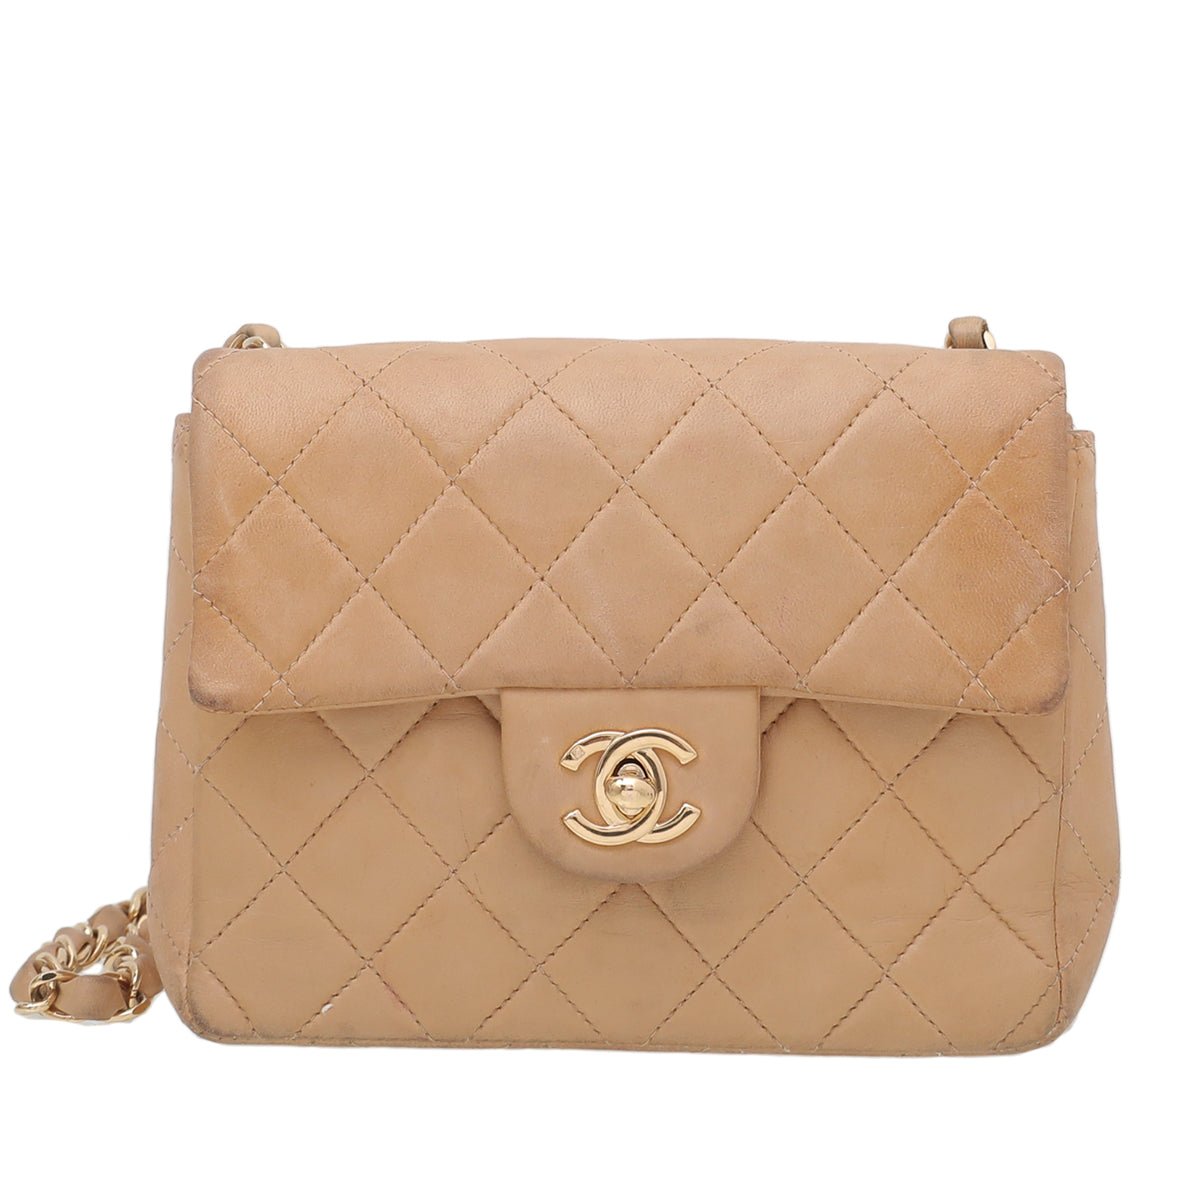 The Closet - Chanel Beige Classic Mini Square Flap Bag | The Closet